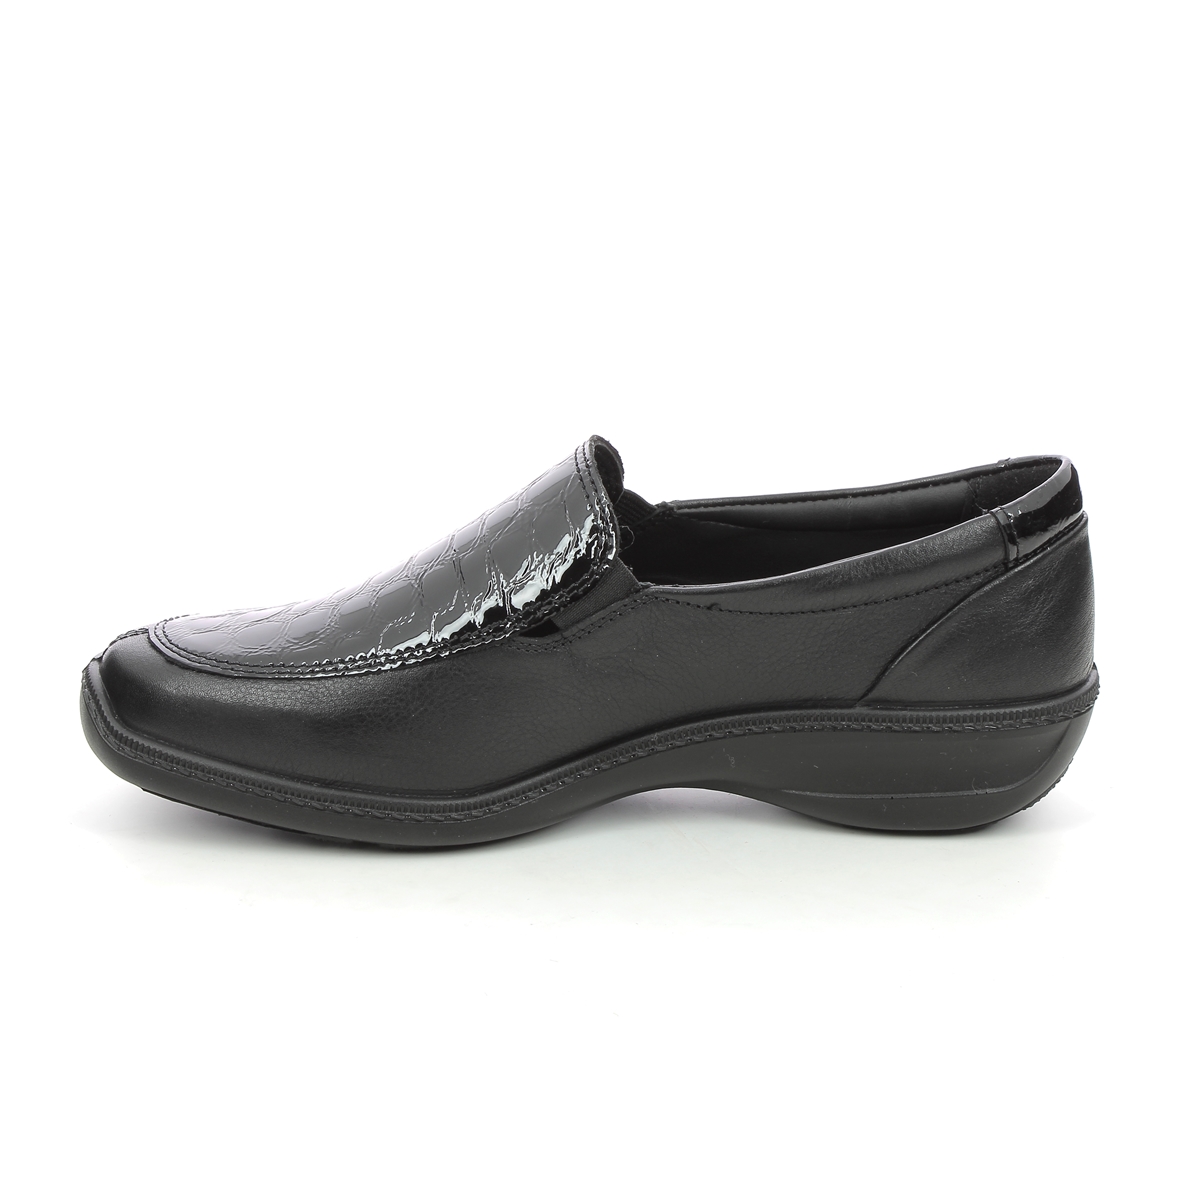 Hotter Calypso 2 Wide 9901-30 Black leather Comfort Slip On Shoes